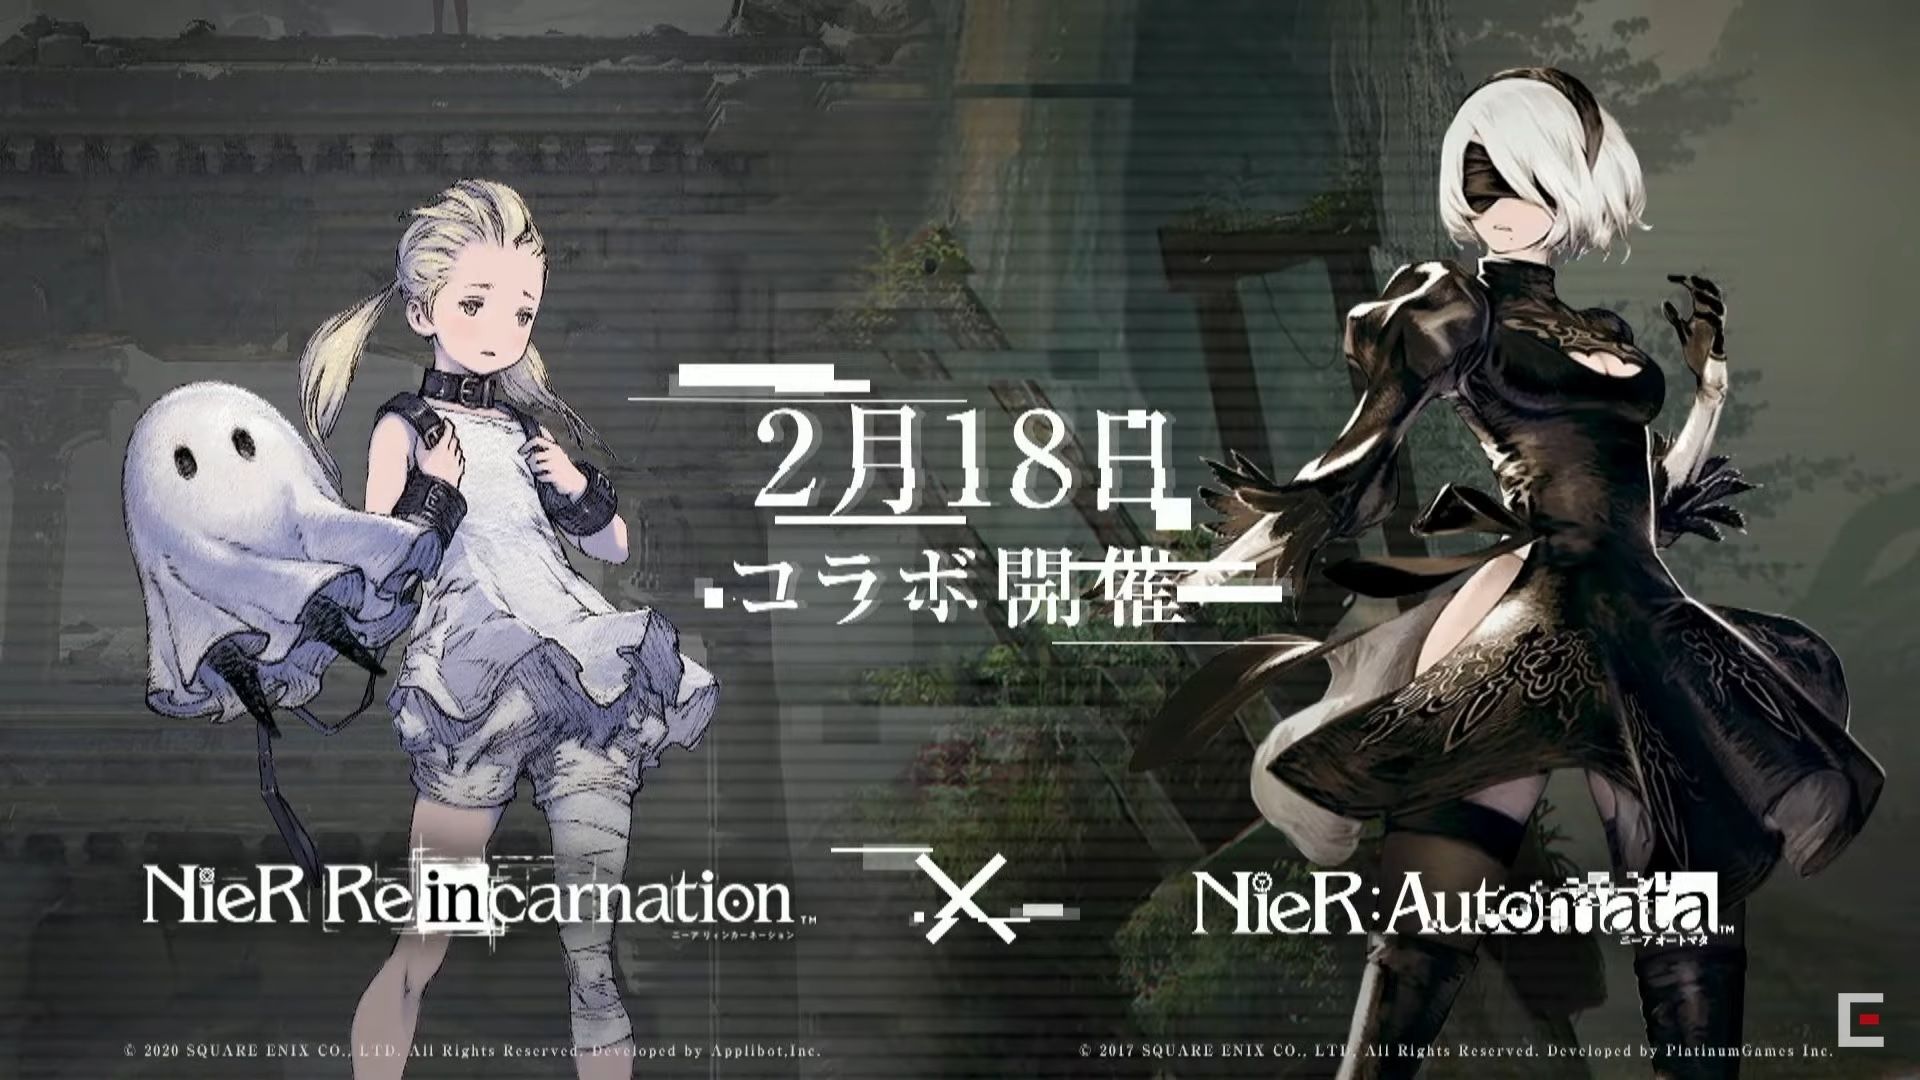 Nier Reincarnation Release Date, Gameplay & Trailers - Tech Advisor